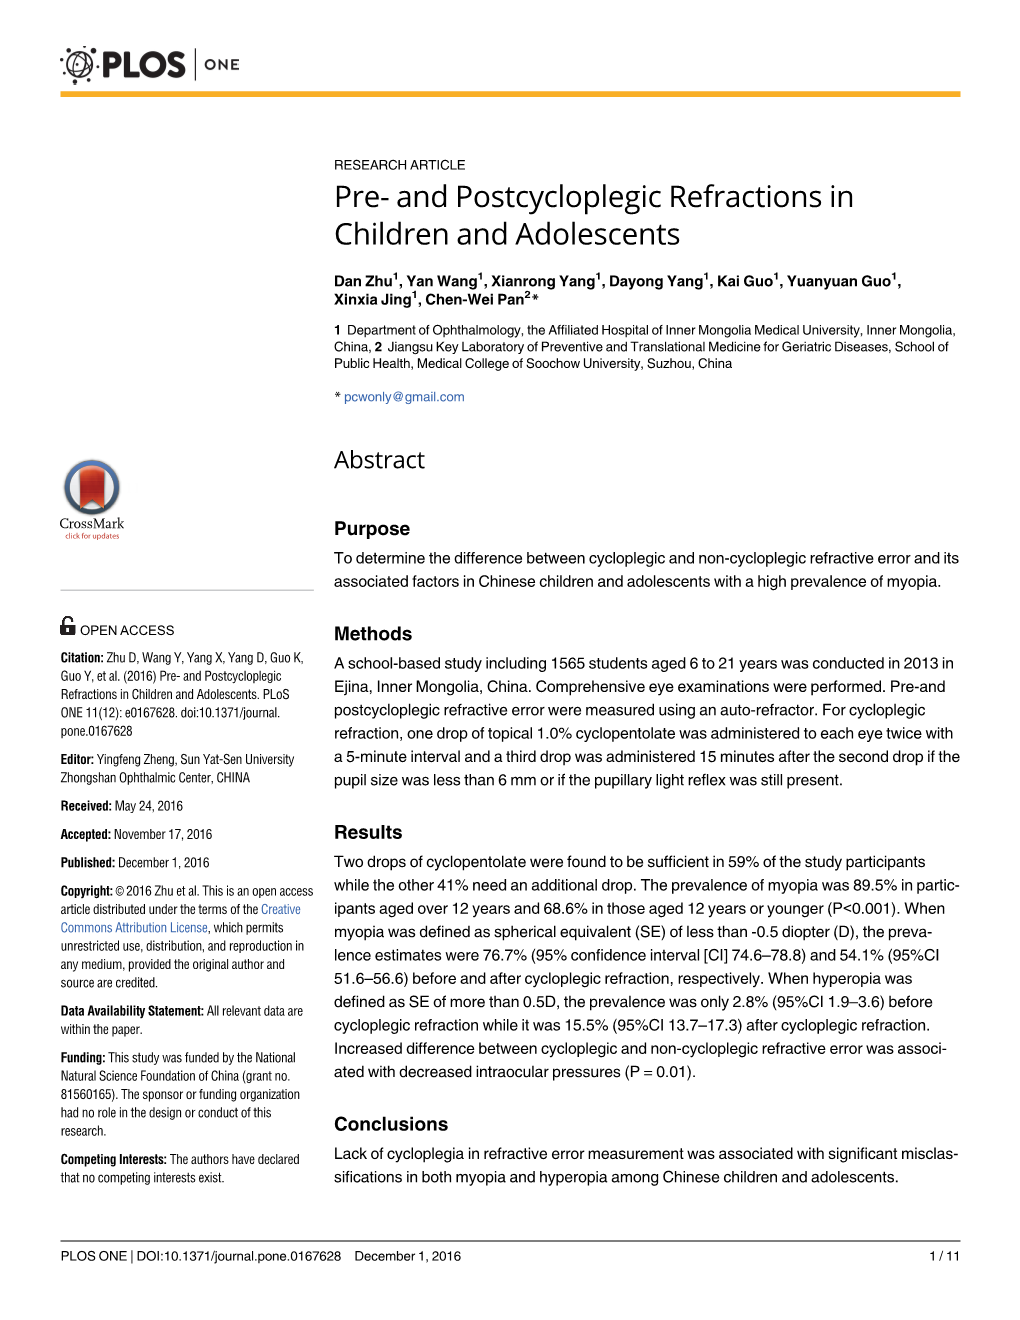 And Postcycloplegic Refractions in Children and Adolescents